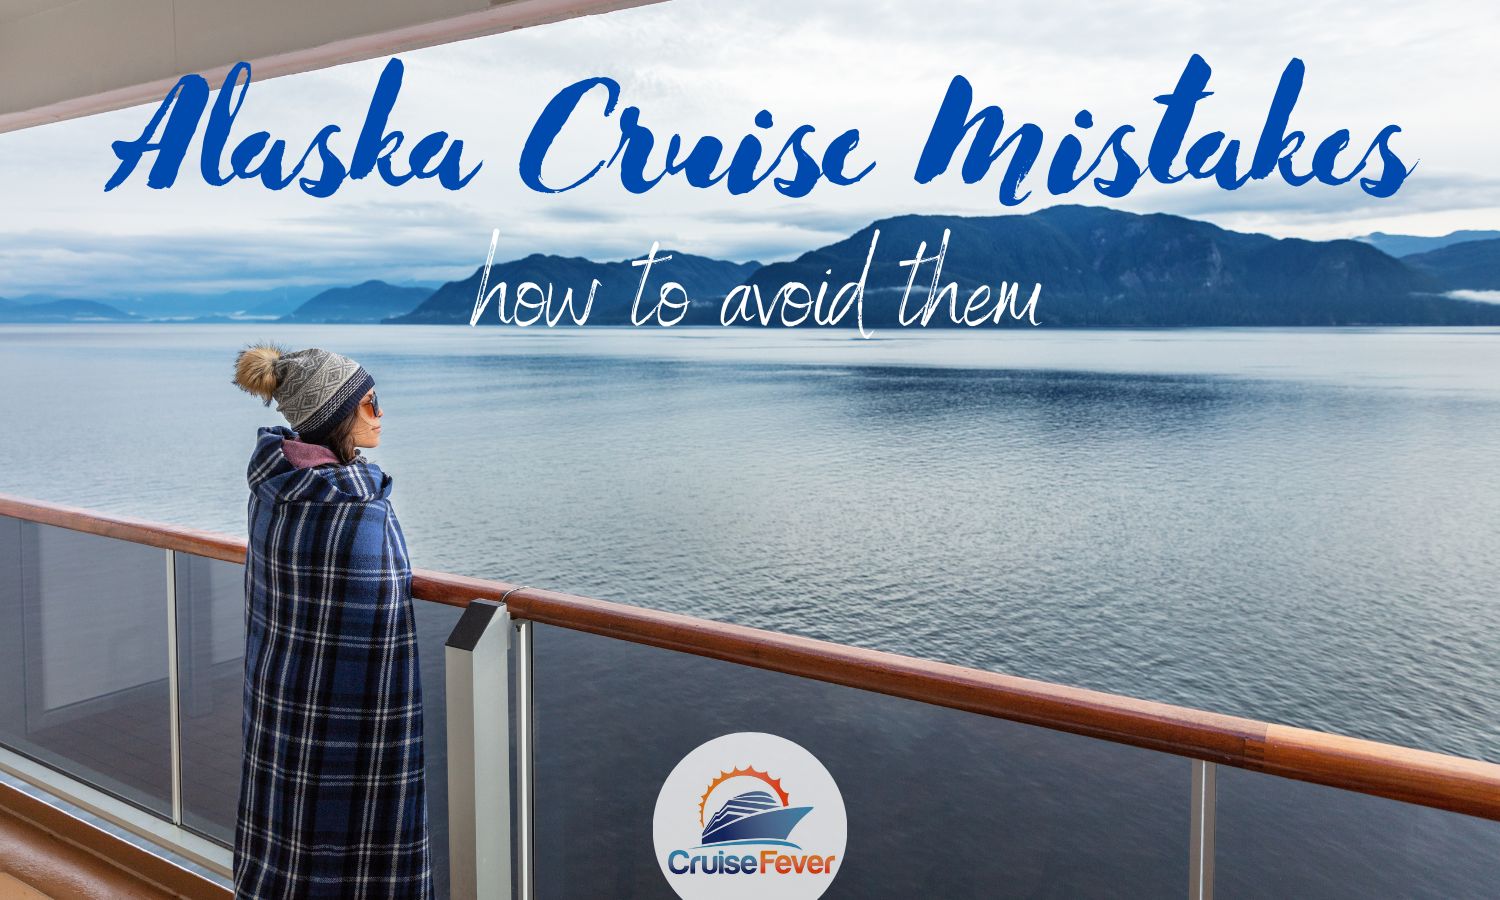 Woman overlooking cruise ship railing in Alaska